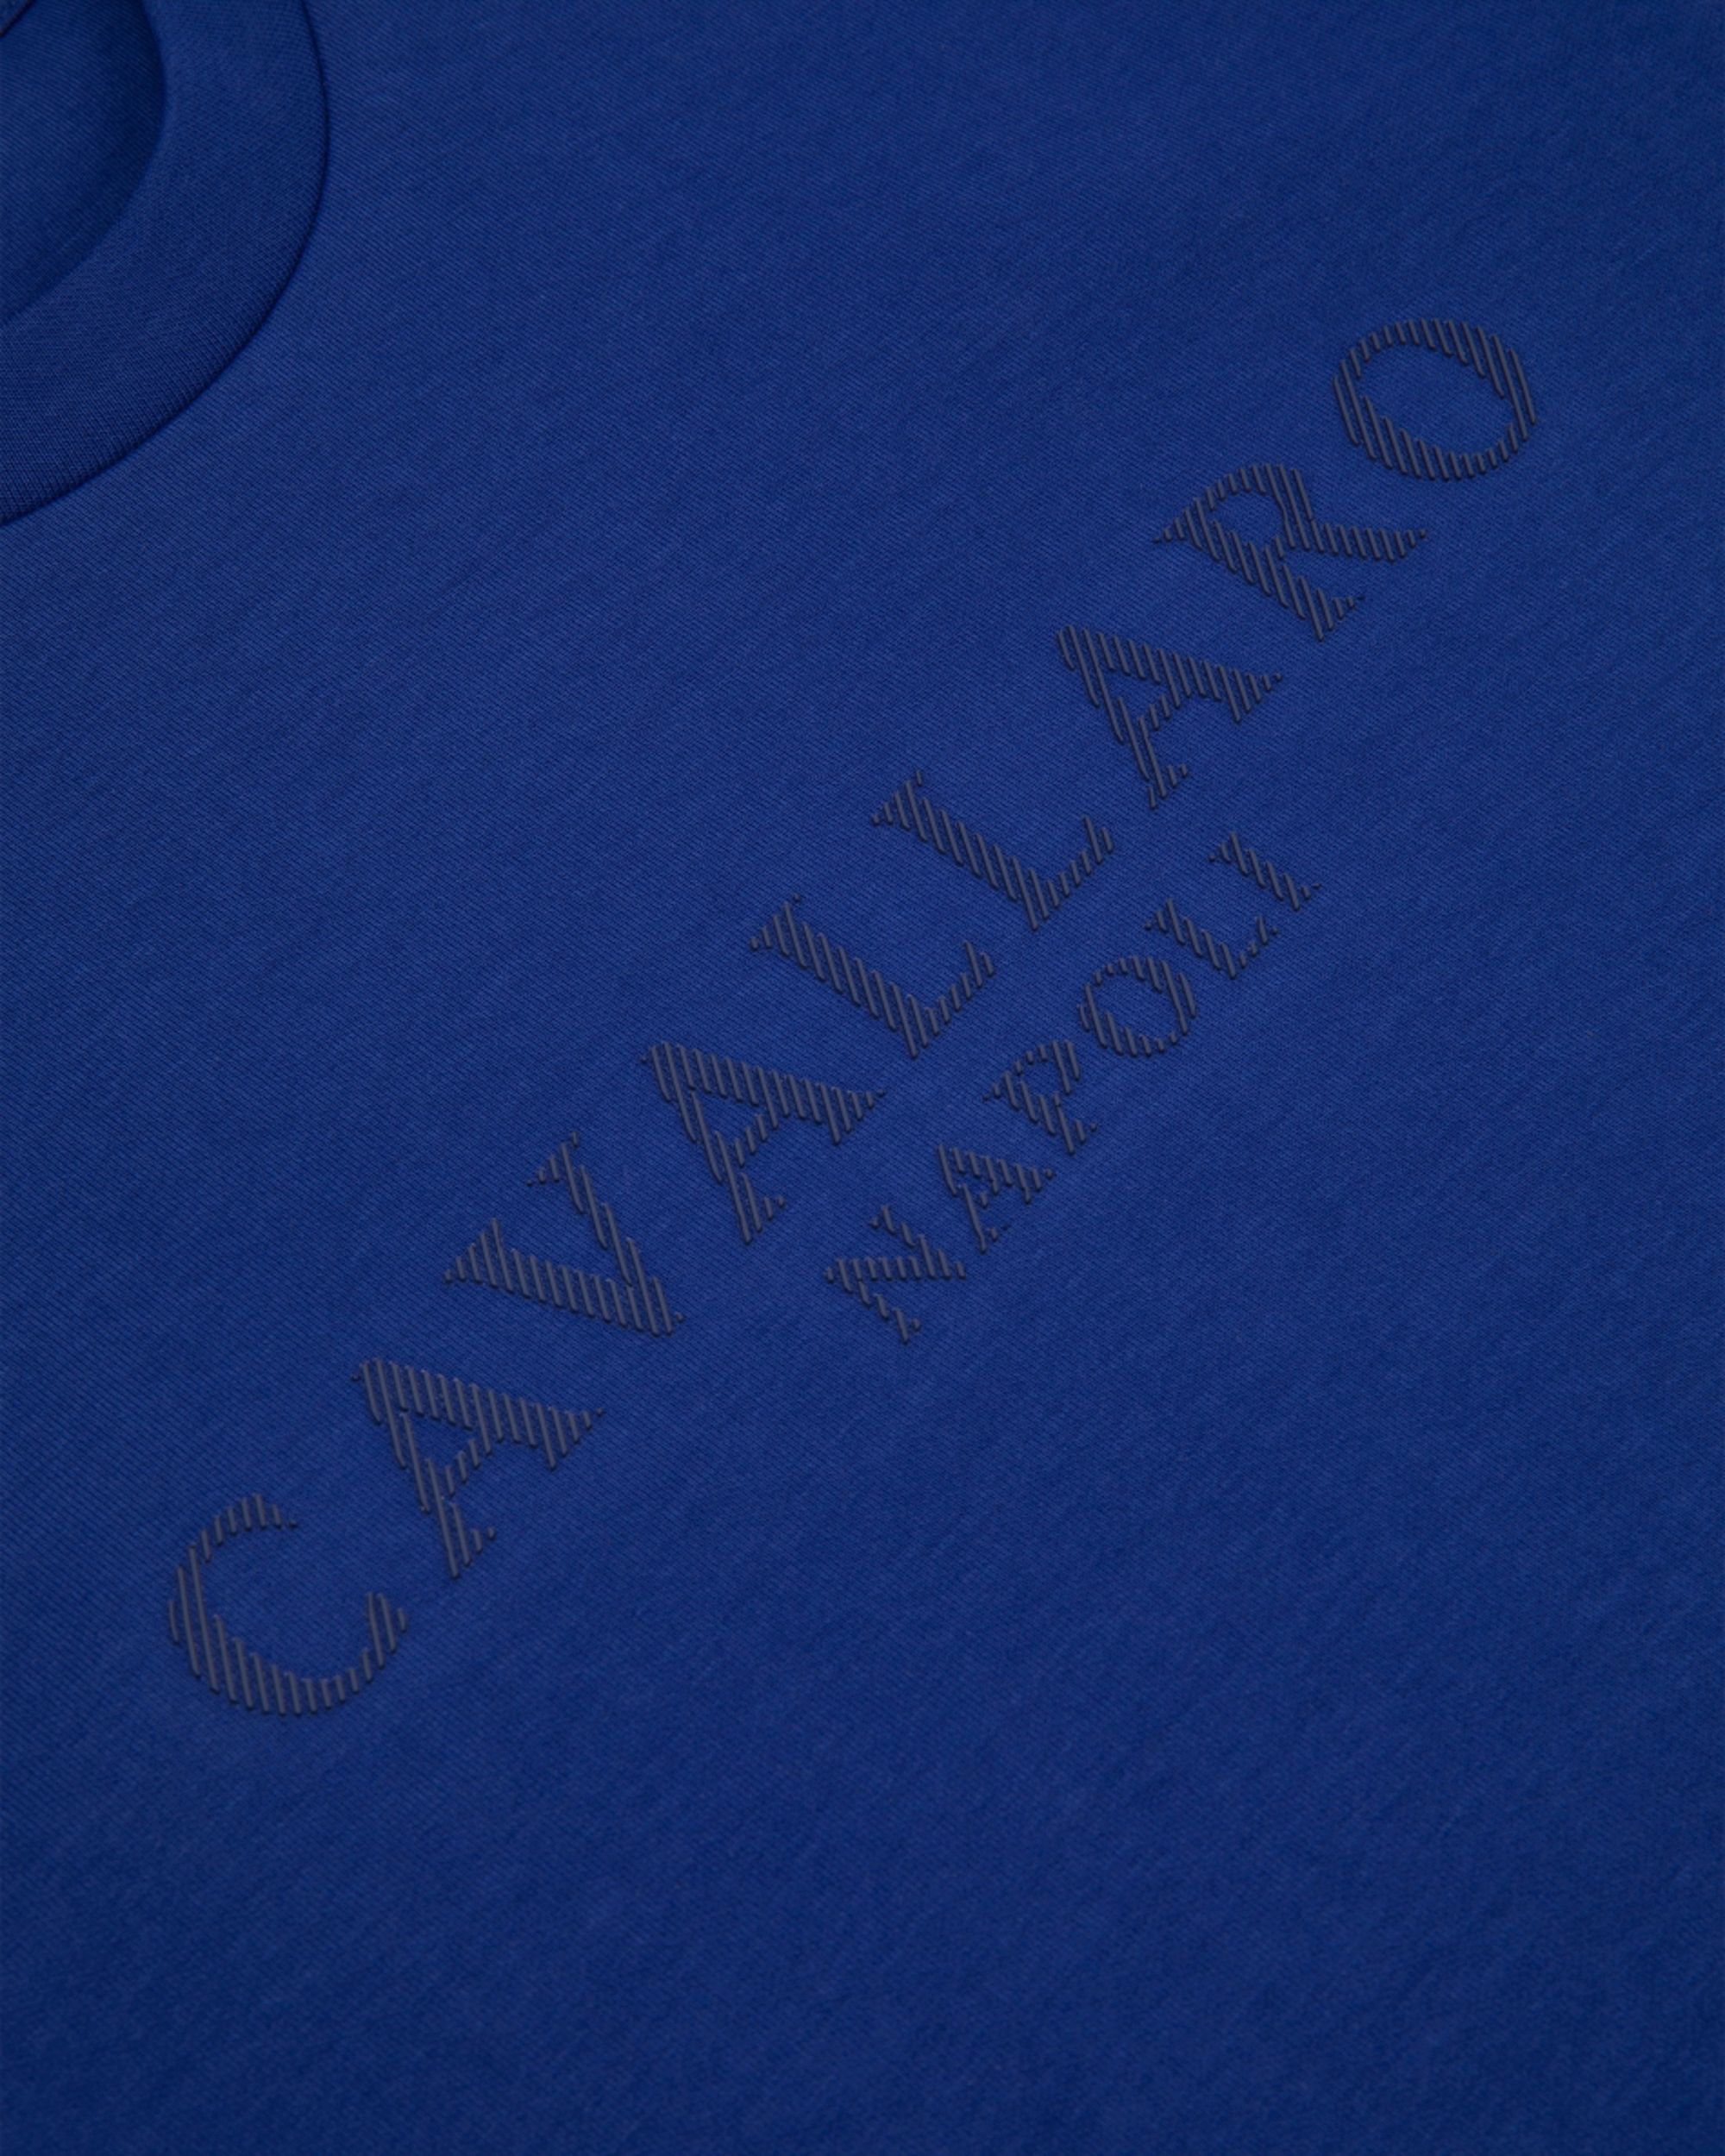 Cavallaro Sweater Blauw 080887-001-L